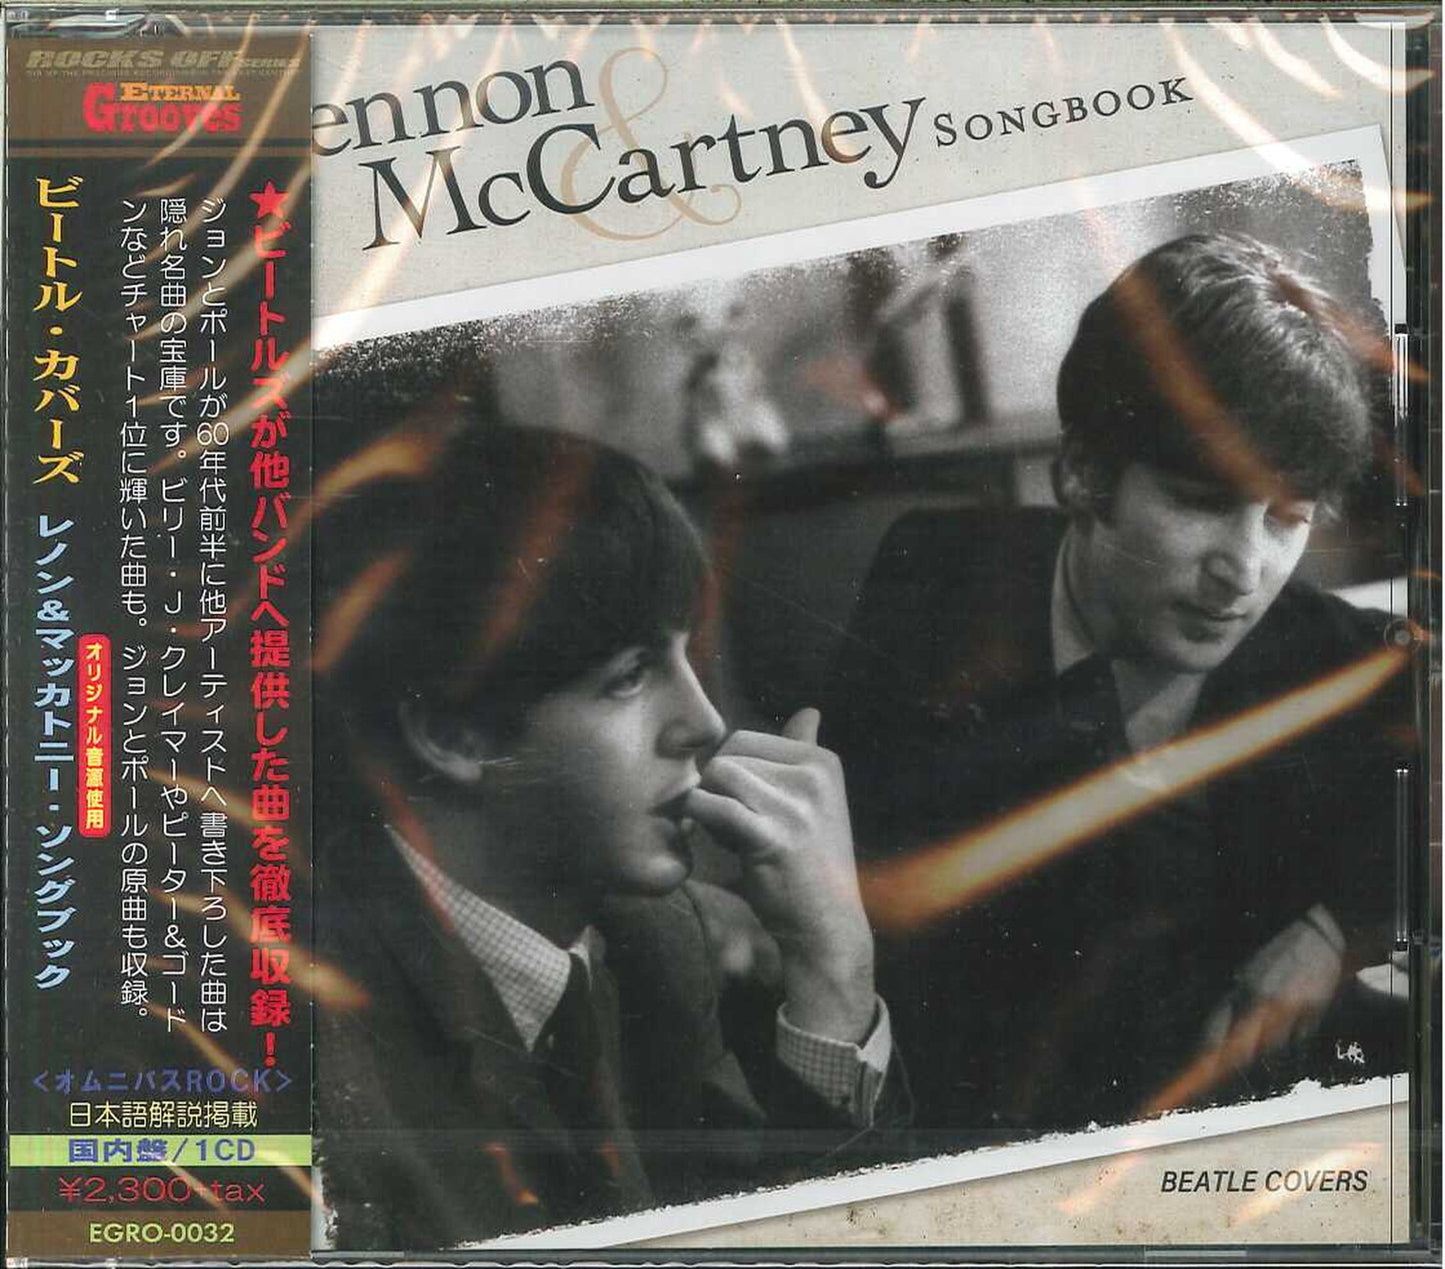 Various Artists - Beatle Covers (Lennon & Mccartney Songbook) - Japan CD